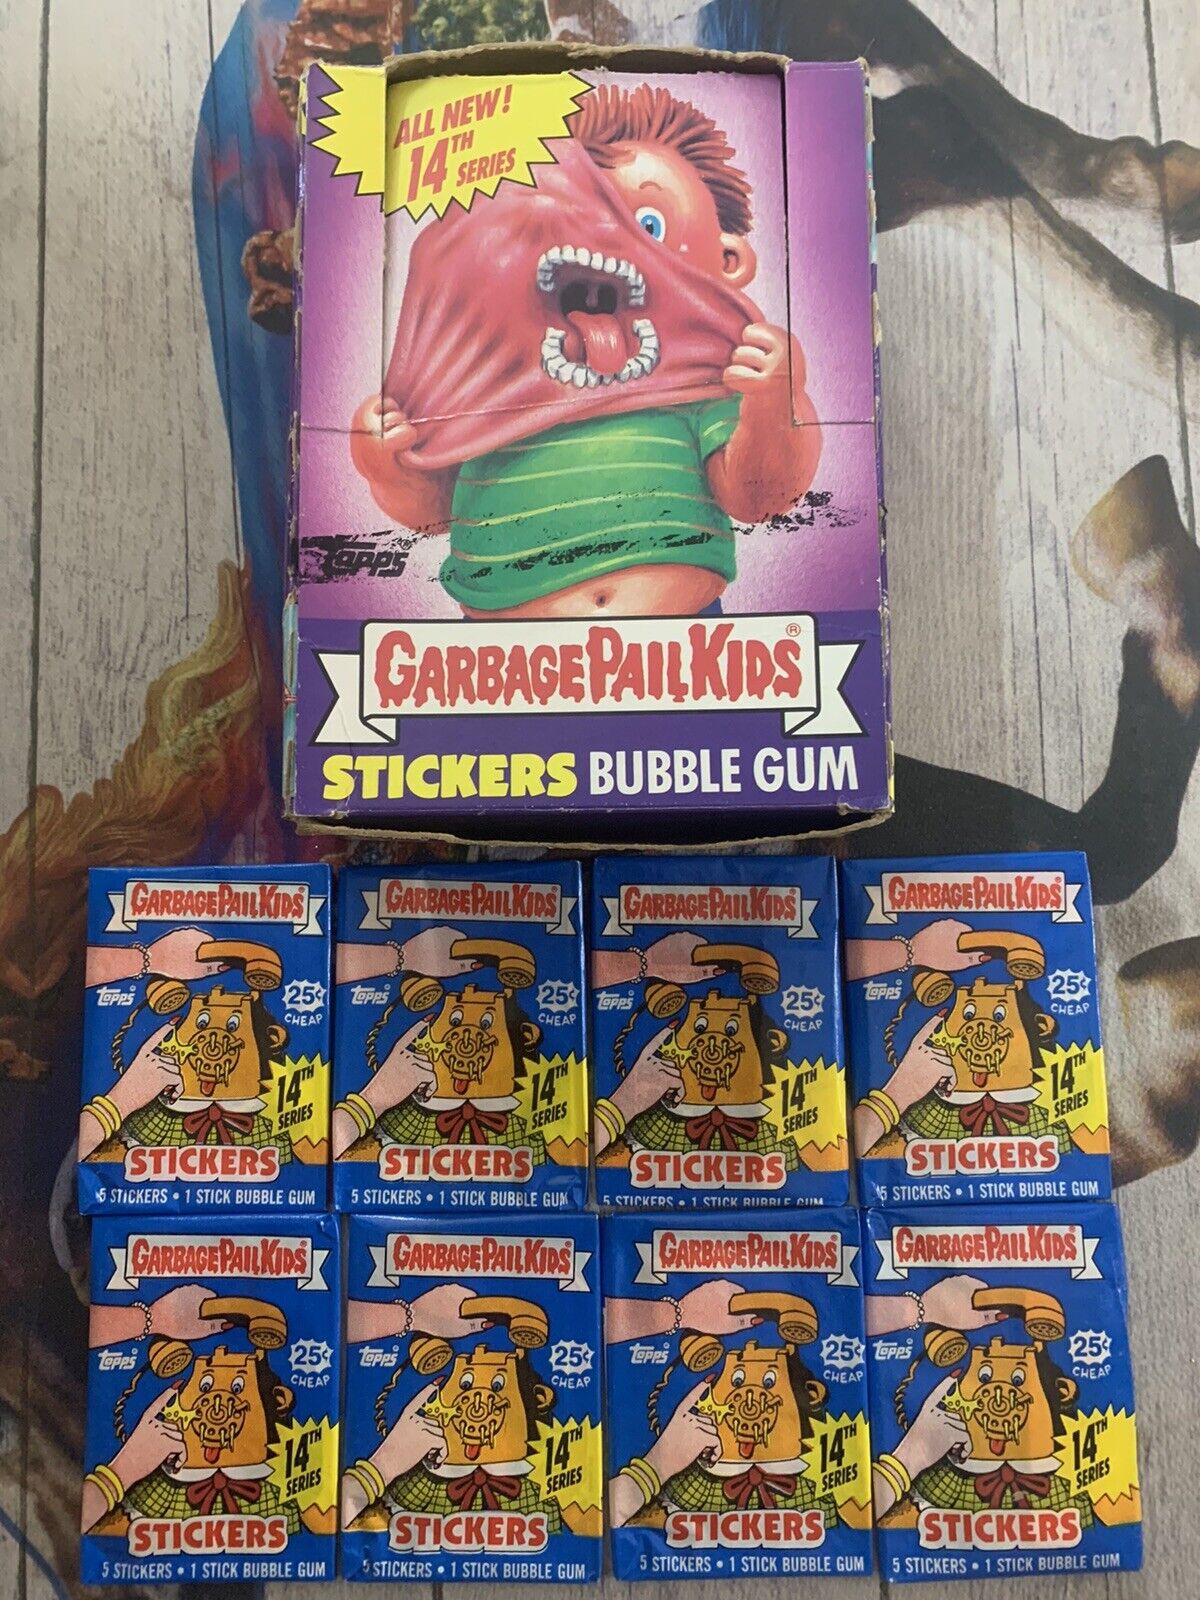 GPK Garbage Pail Kids Original 14th Series Box Plus 8 Sealed Wax Packs